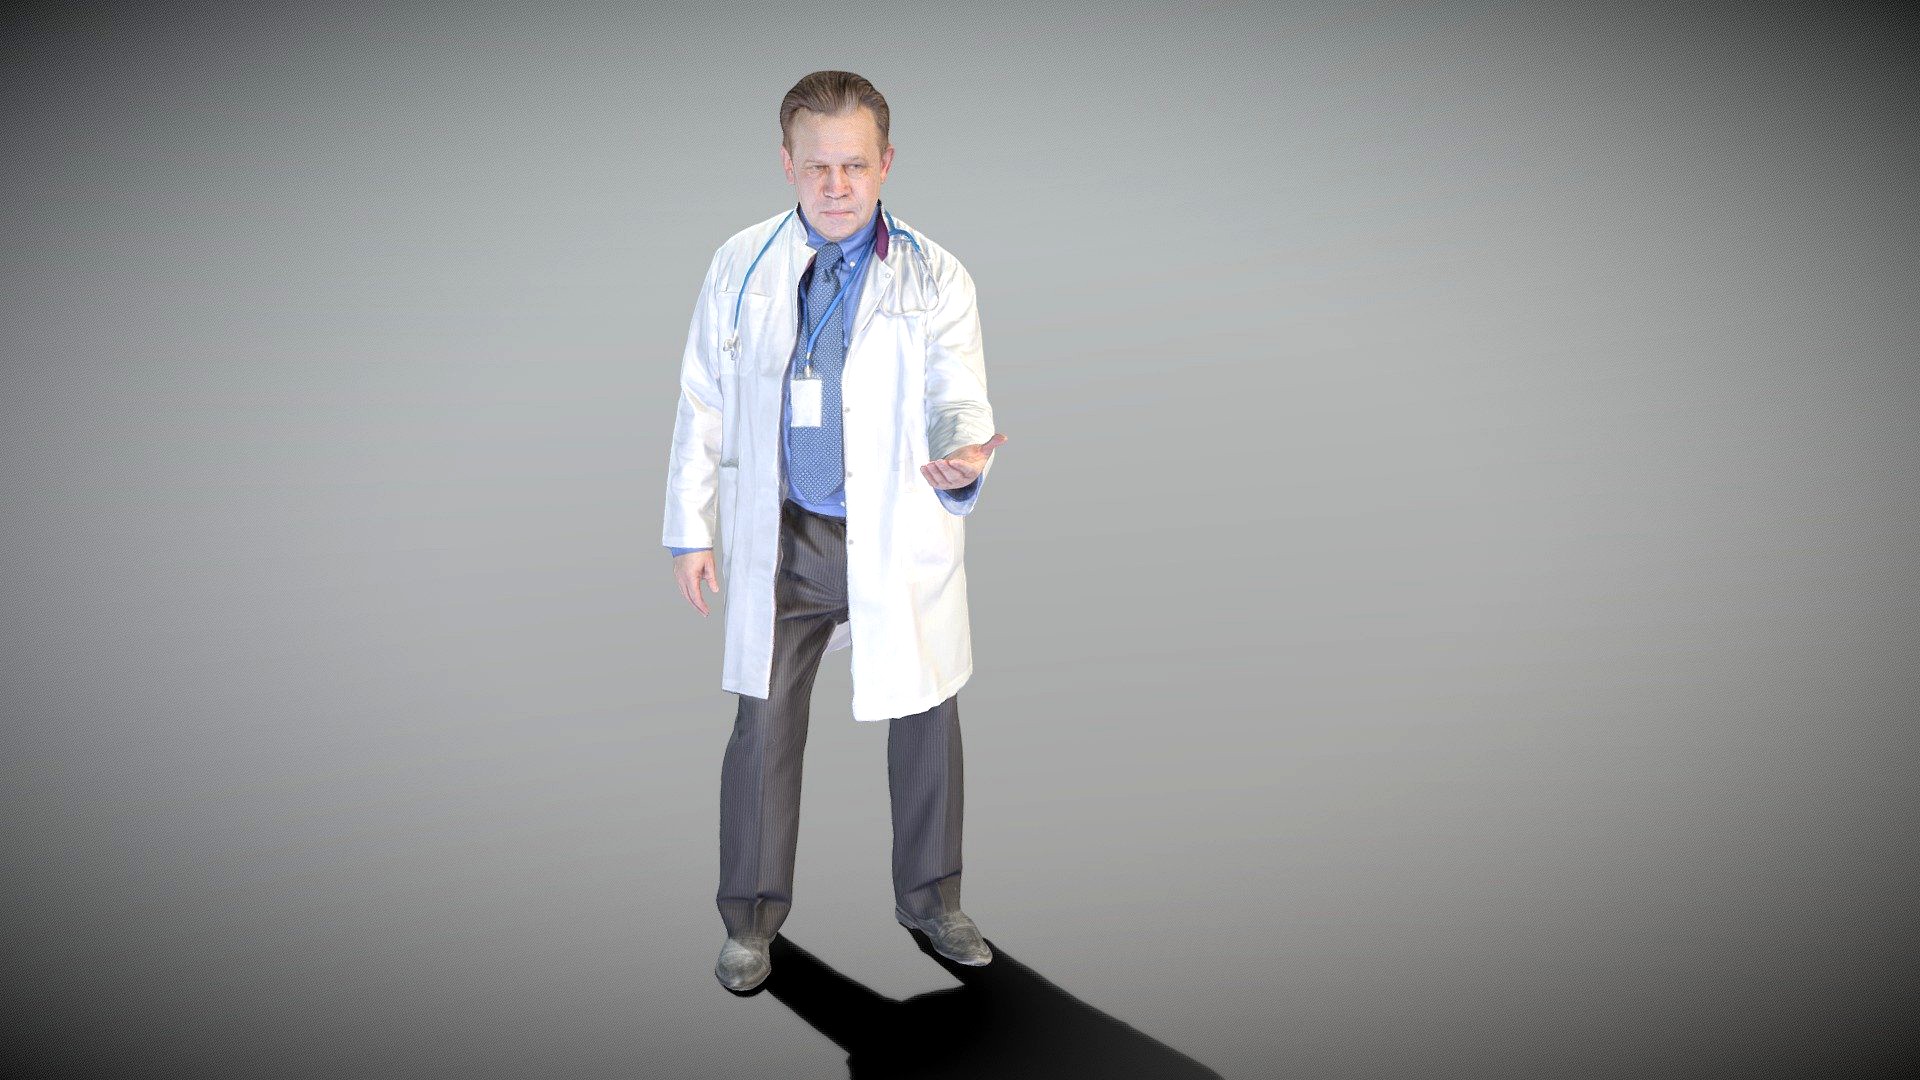 Male medical doctor posing 92